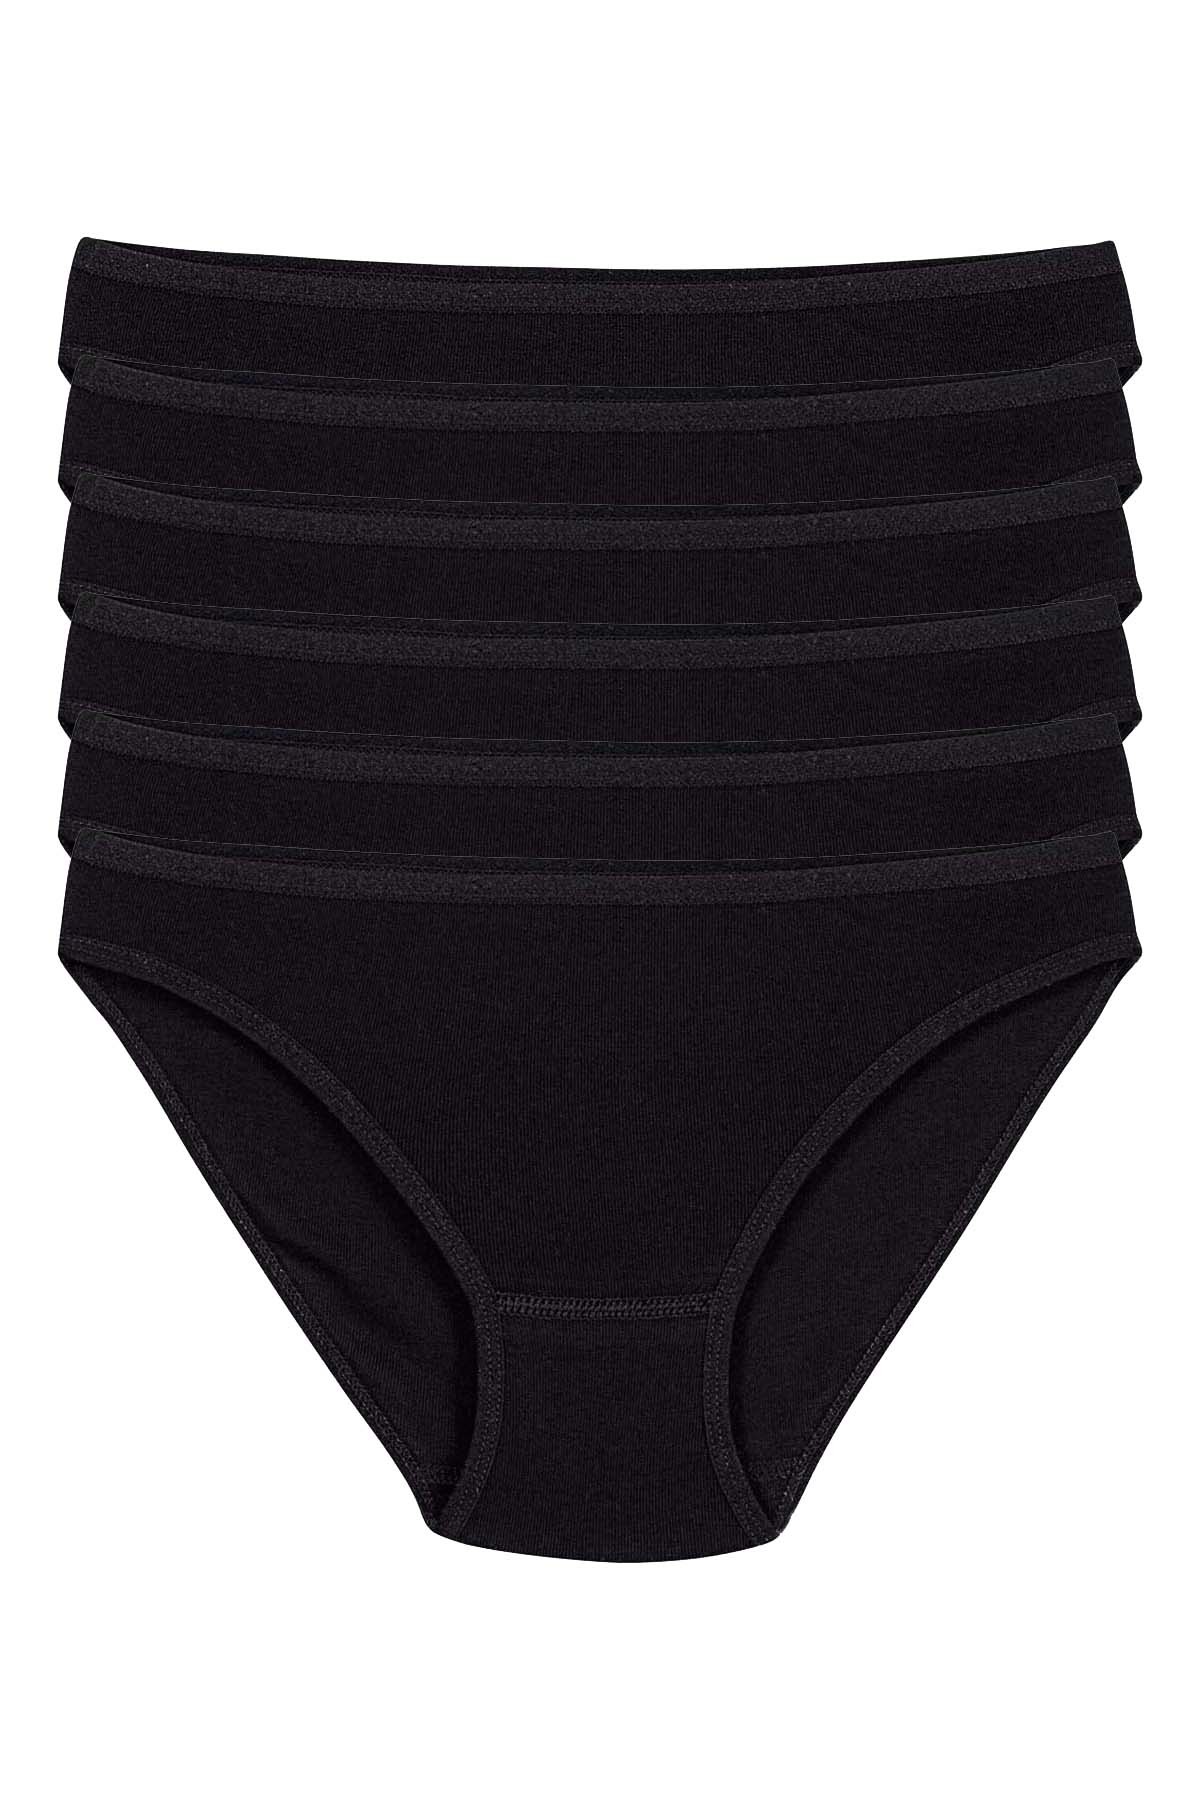 Kadın Siyah 6'lı Paket %100 Pamuk Bikini Külot